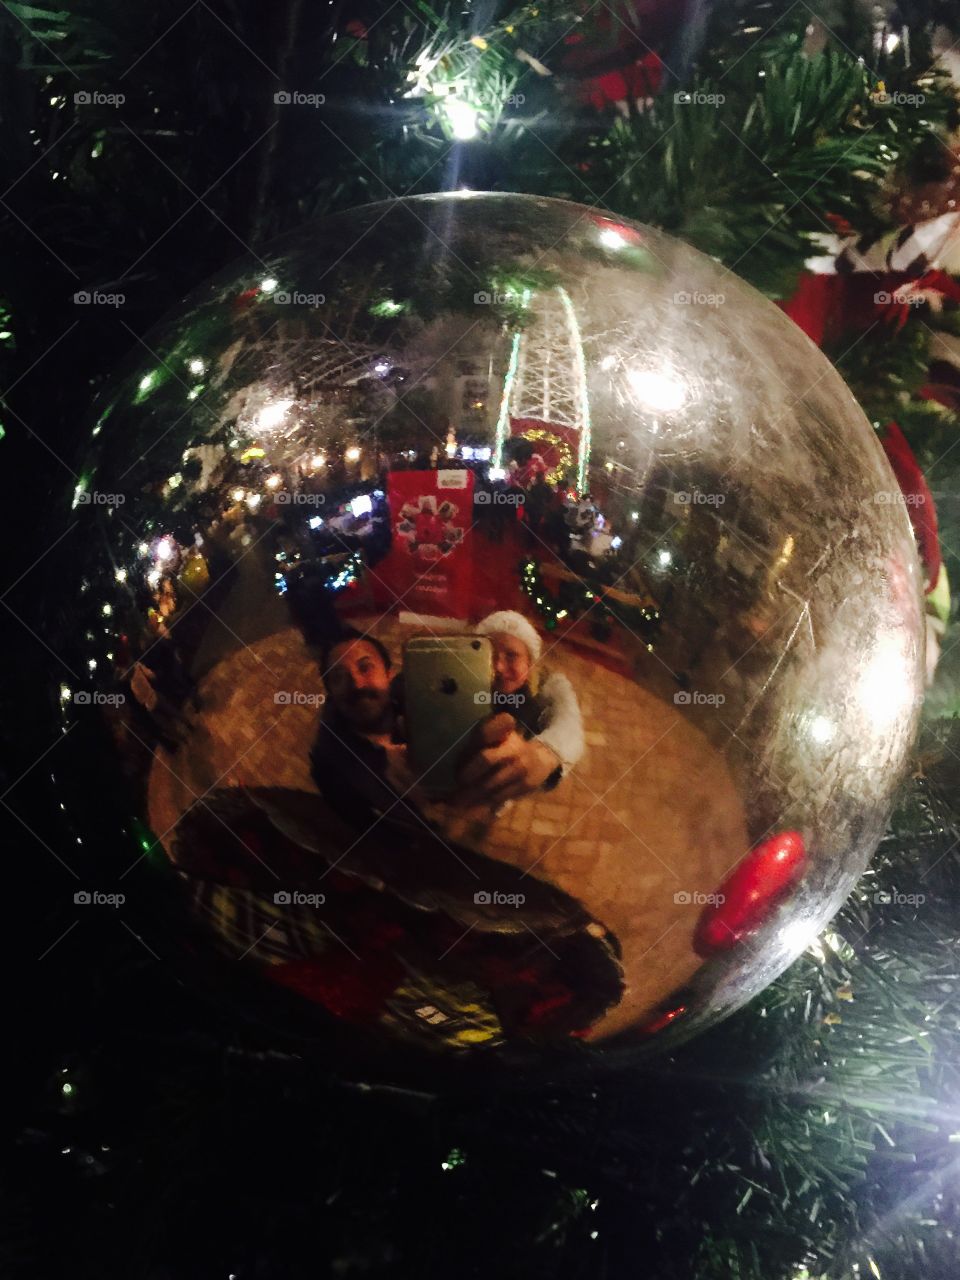 Man and woman reflecting Christmas ornaments